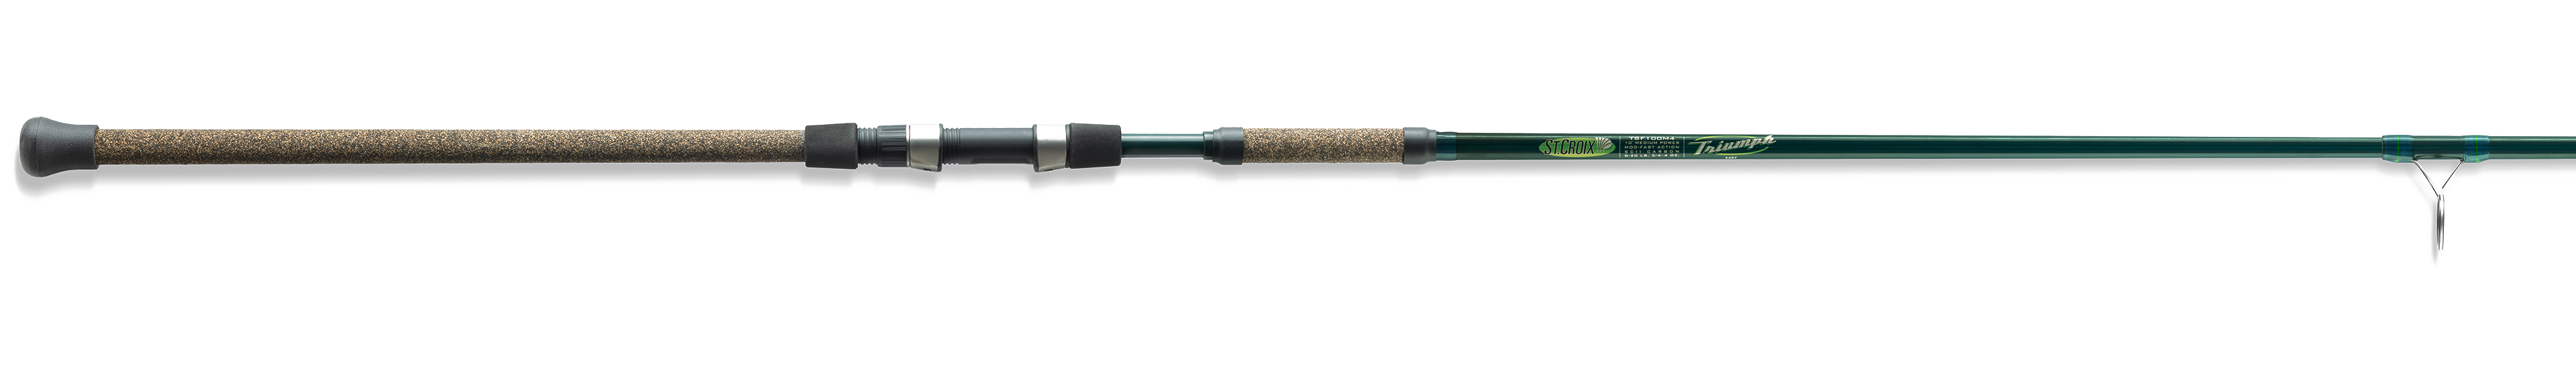 Buy Seaquest Surf Rod 3-Piece 4-Piece Travel Fishing Rod Portable